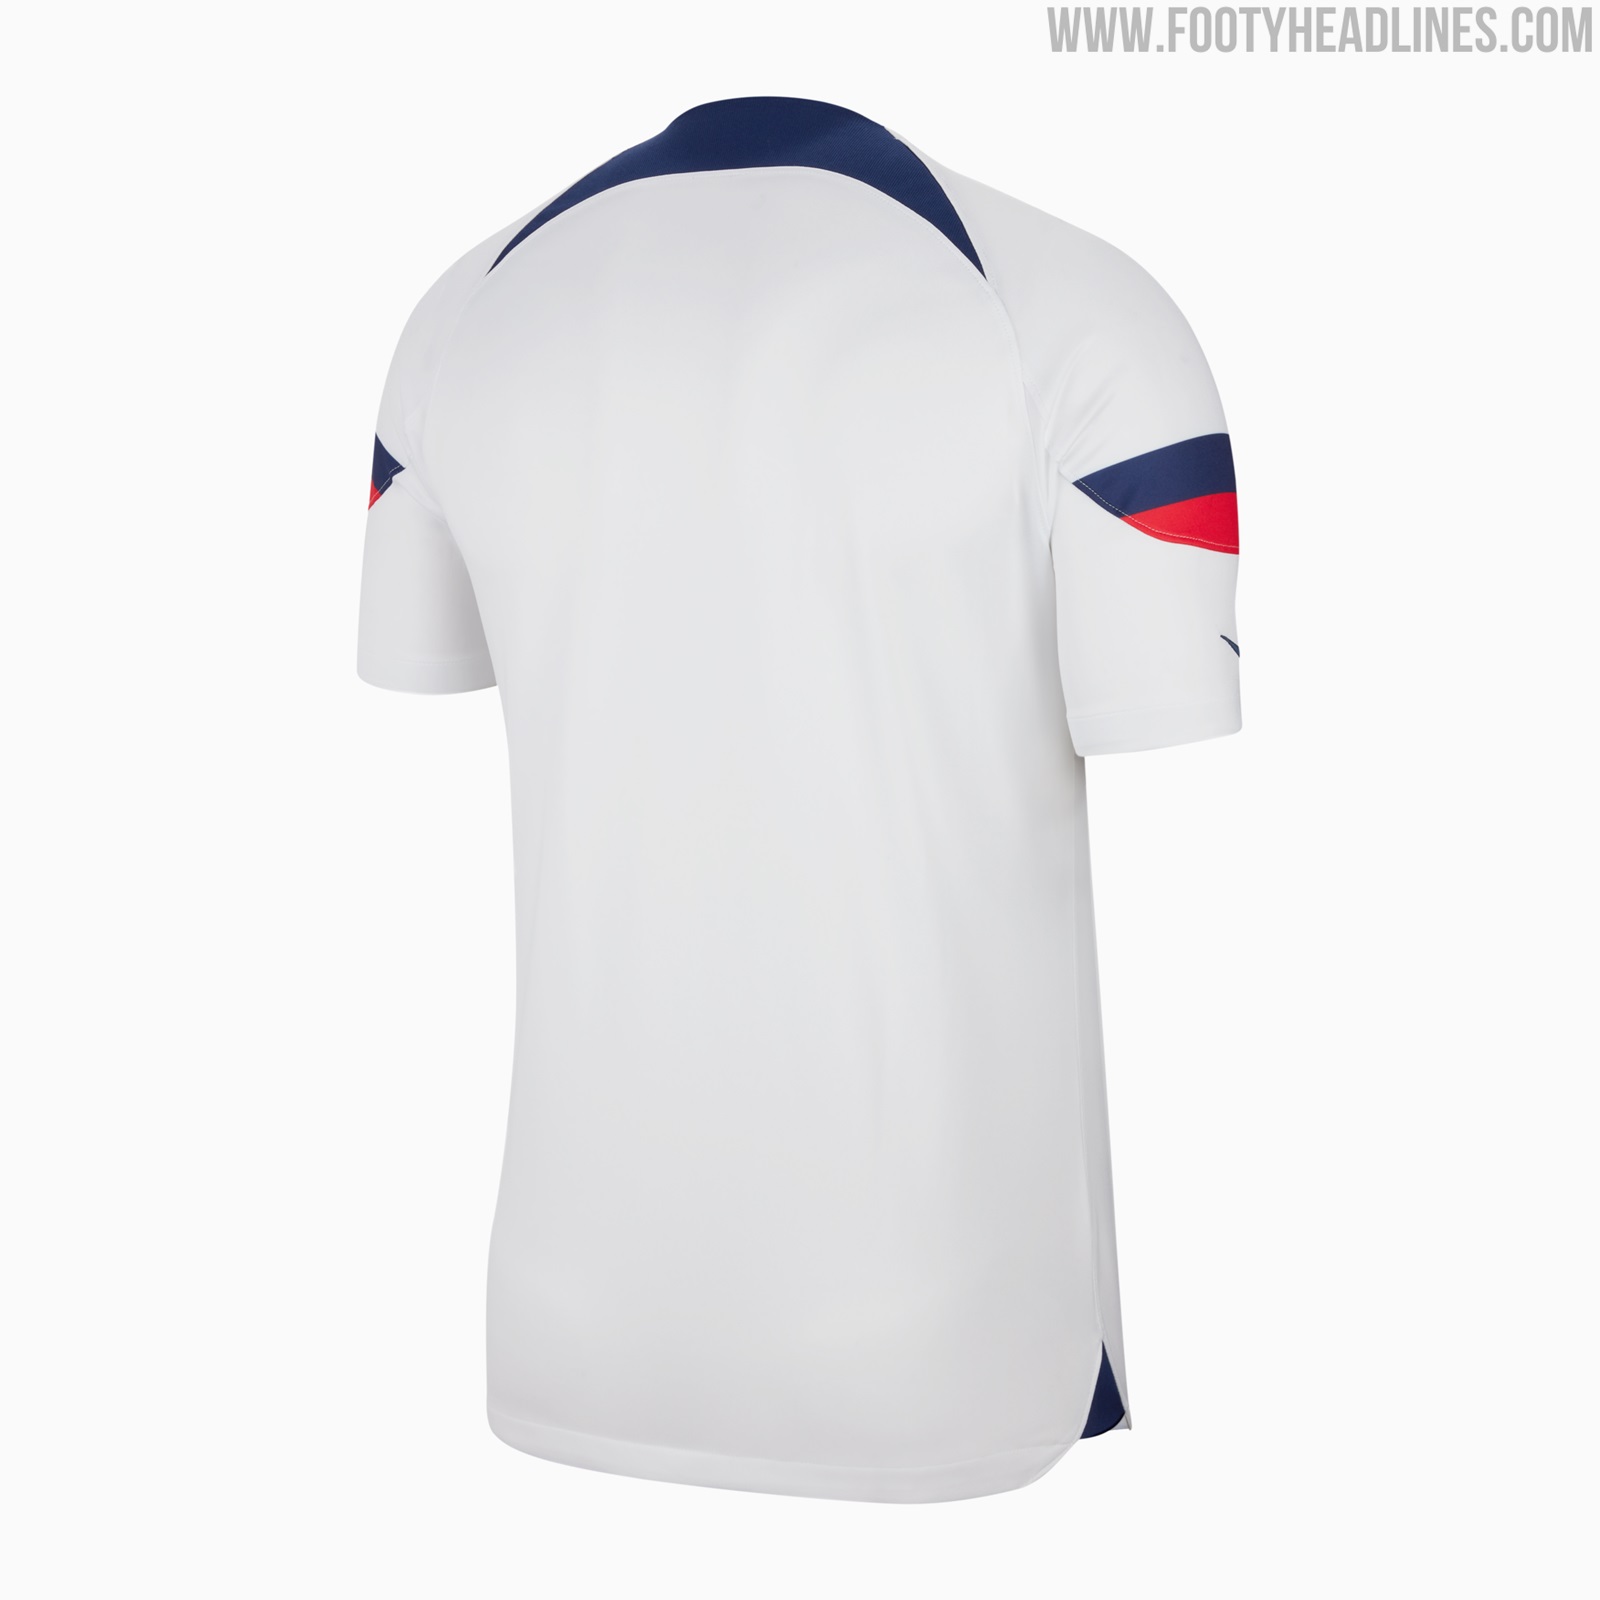 USA 2022 World Cup Home & Away Kits Released - Footy Headlines